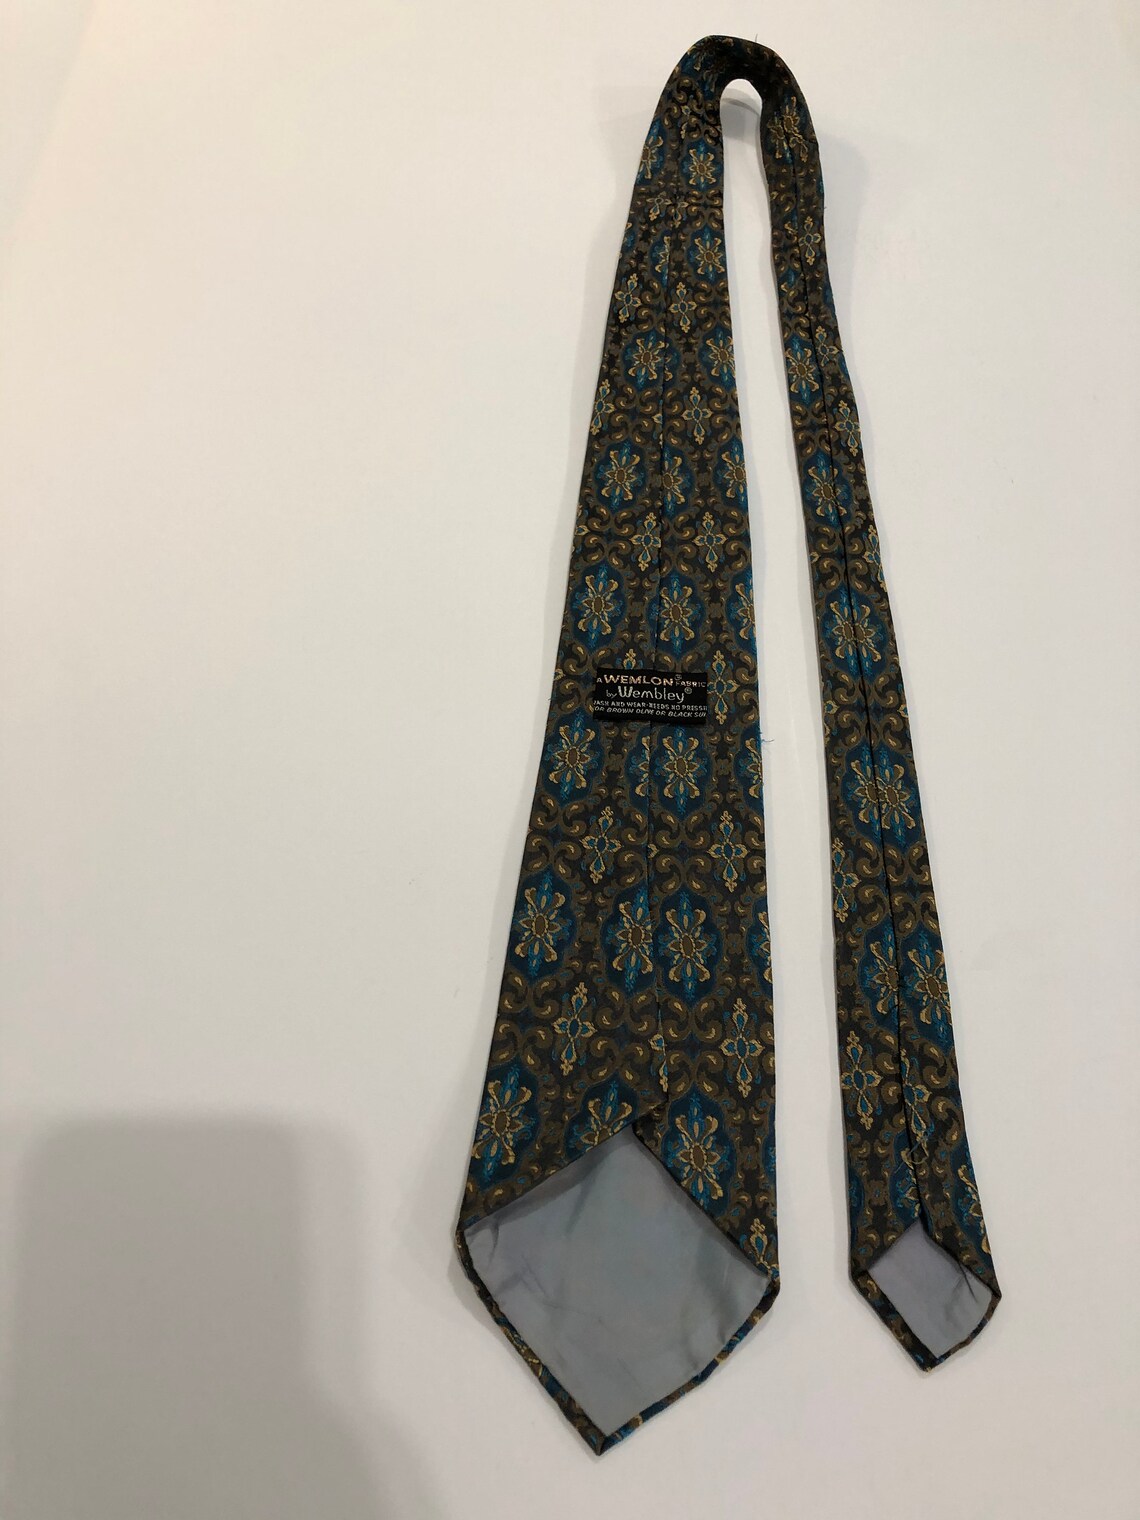 Antique Tie Wembley Neckite Cravat USA Made 1970s 32 | Etsy